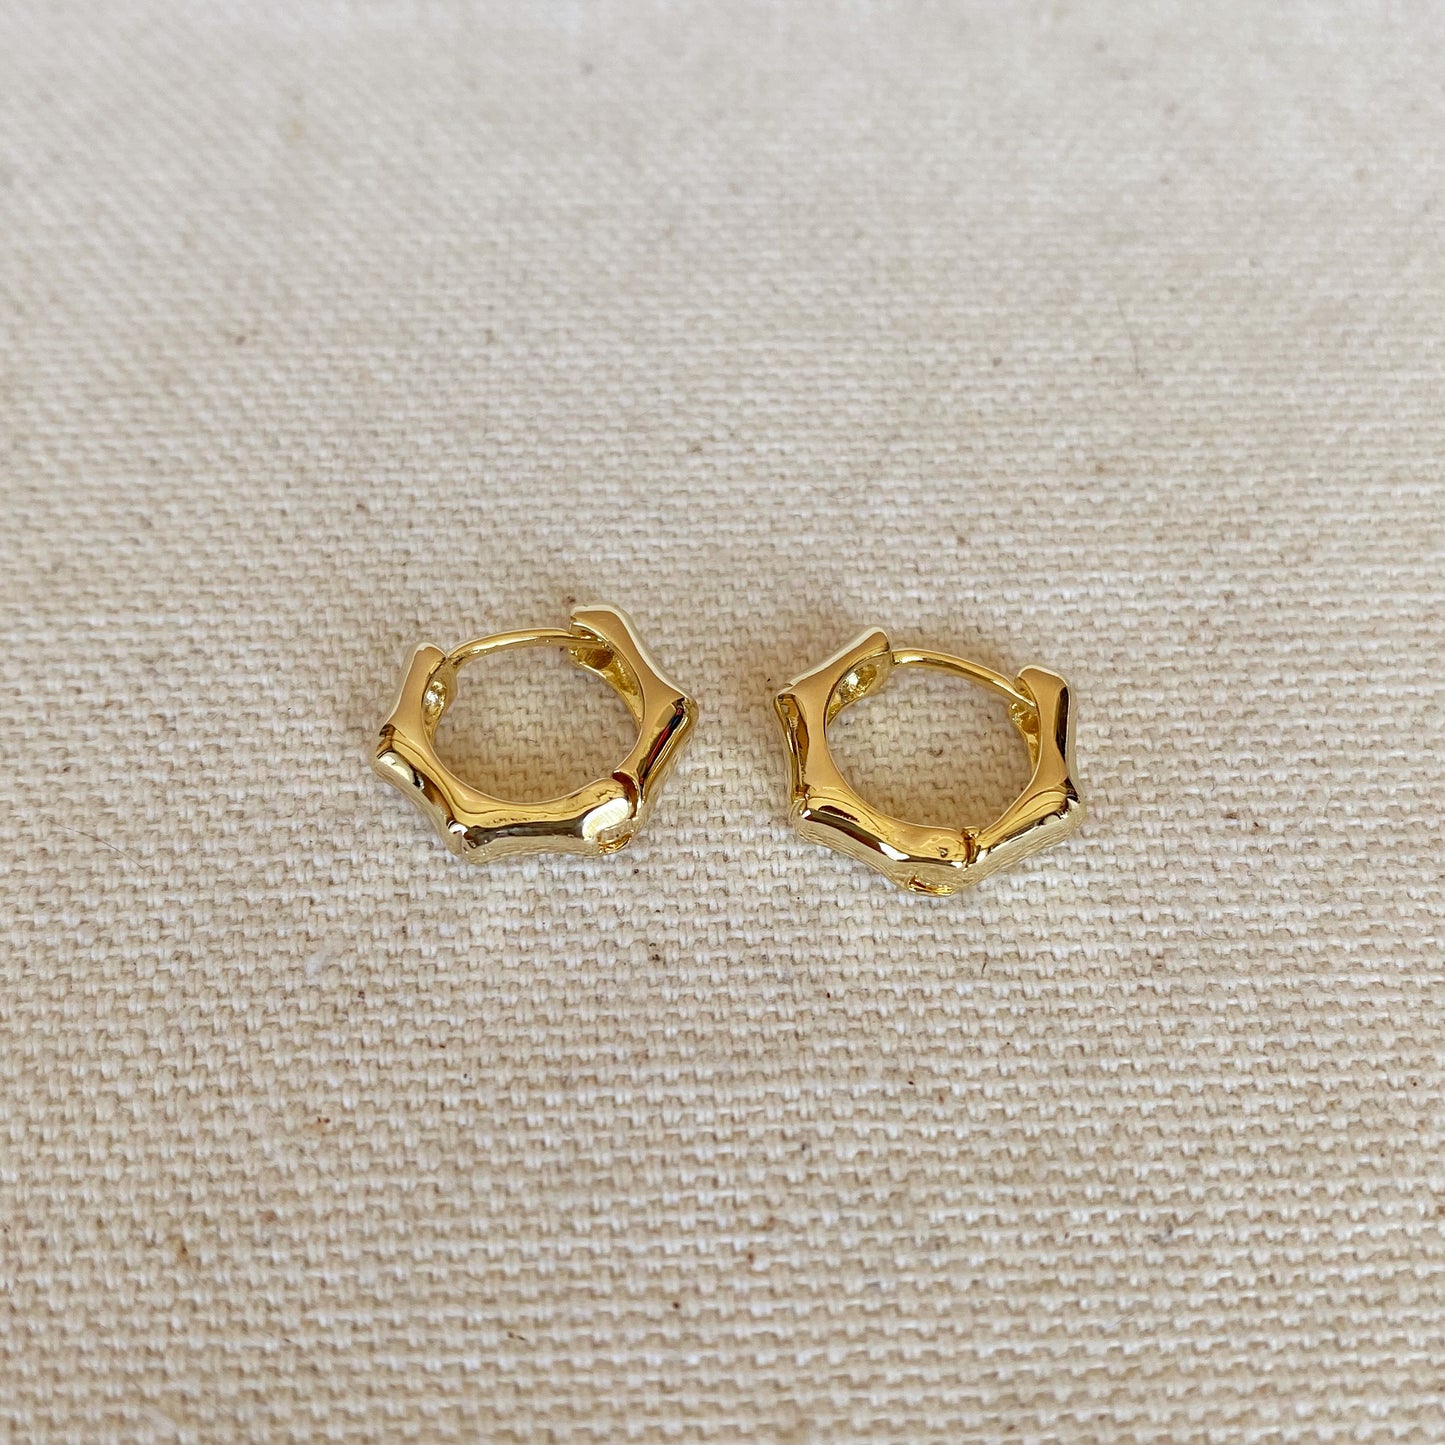 GoldFi 18k Gold Filled Bamboo Clicker Hoop Earrings